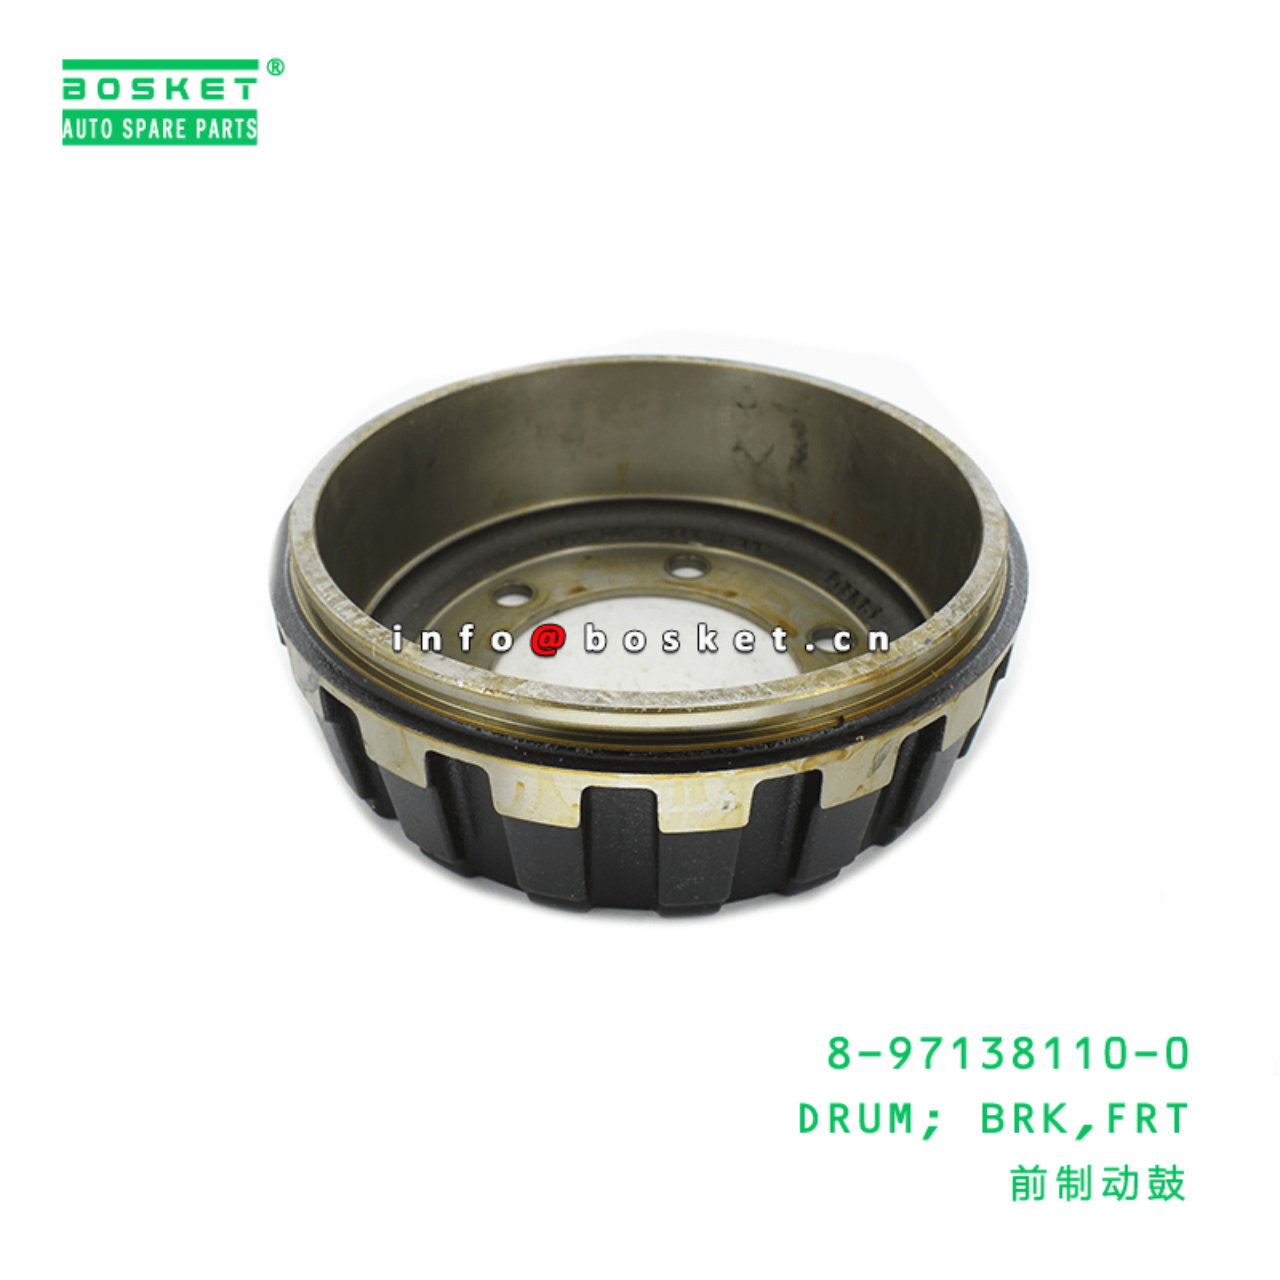 8-97138110-0 Front Brake Drum Suitable for ISUZU NPS 4x4 8971381100